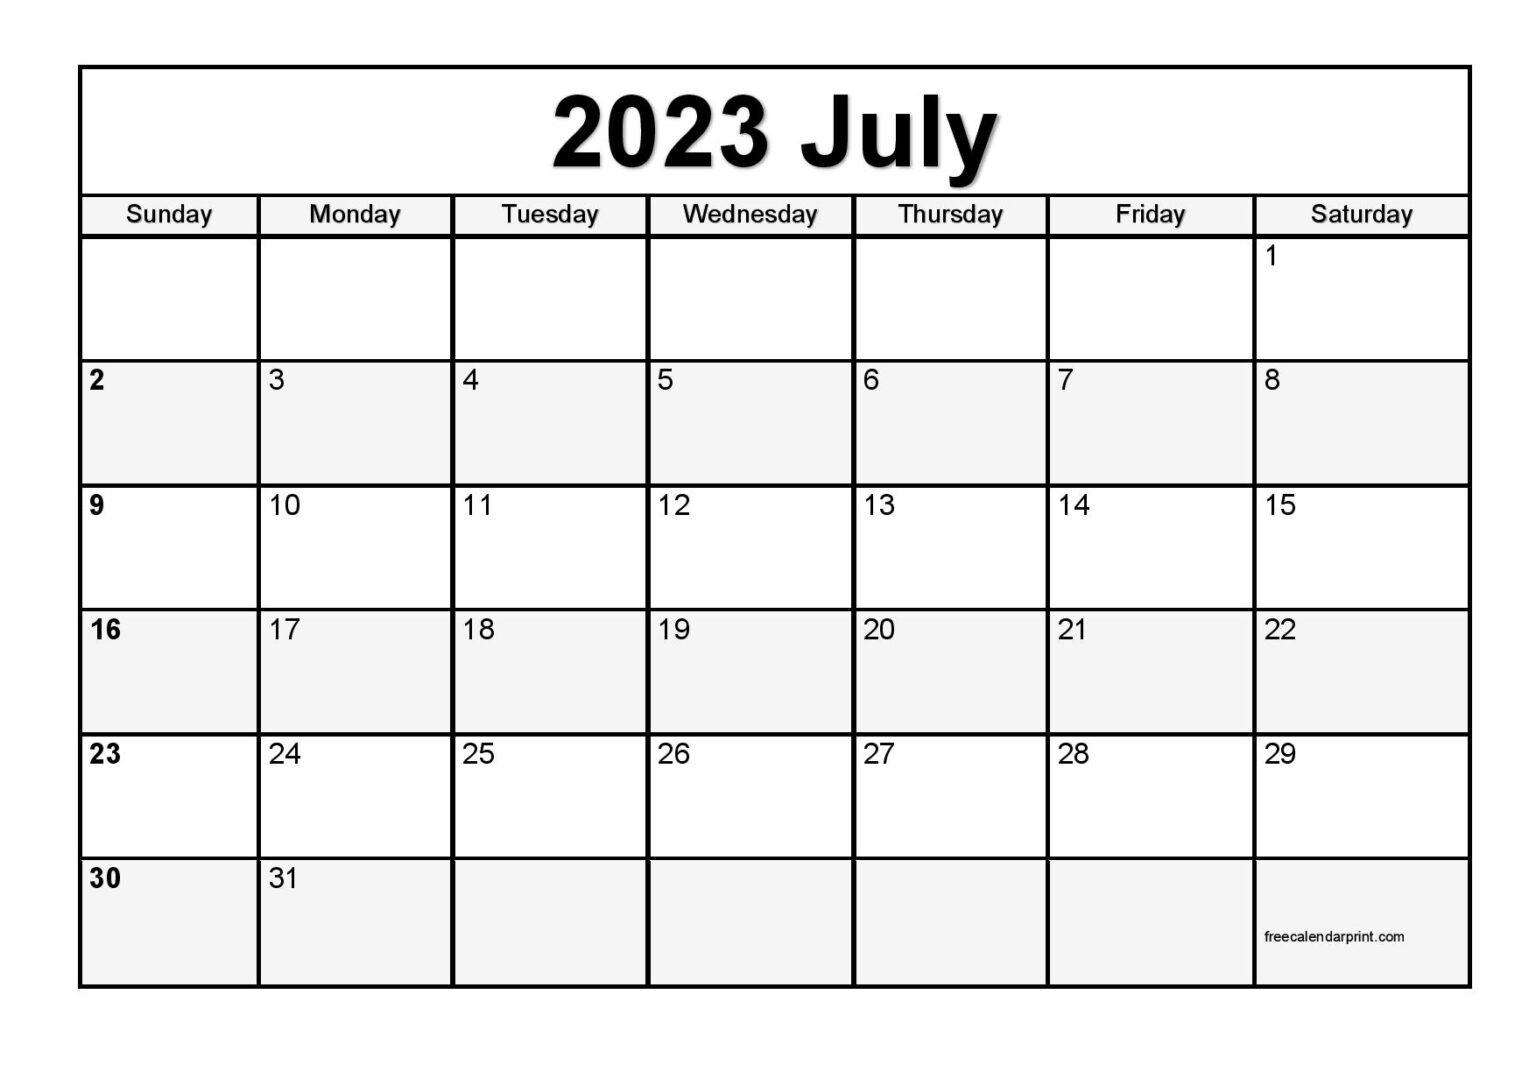 July 2023 Print Out Calendar - www.vrogue.co